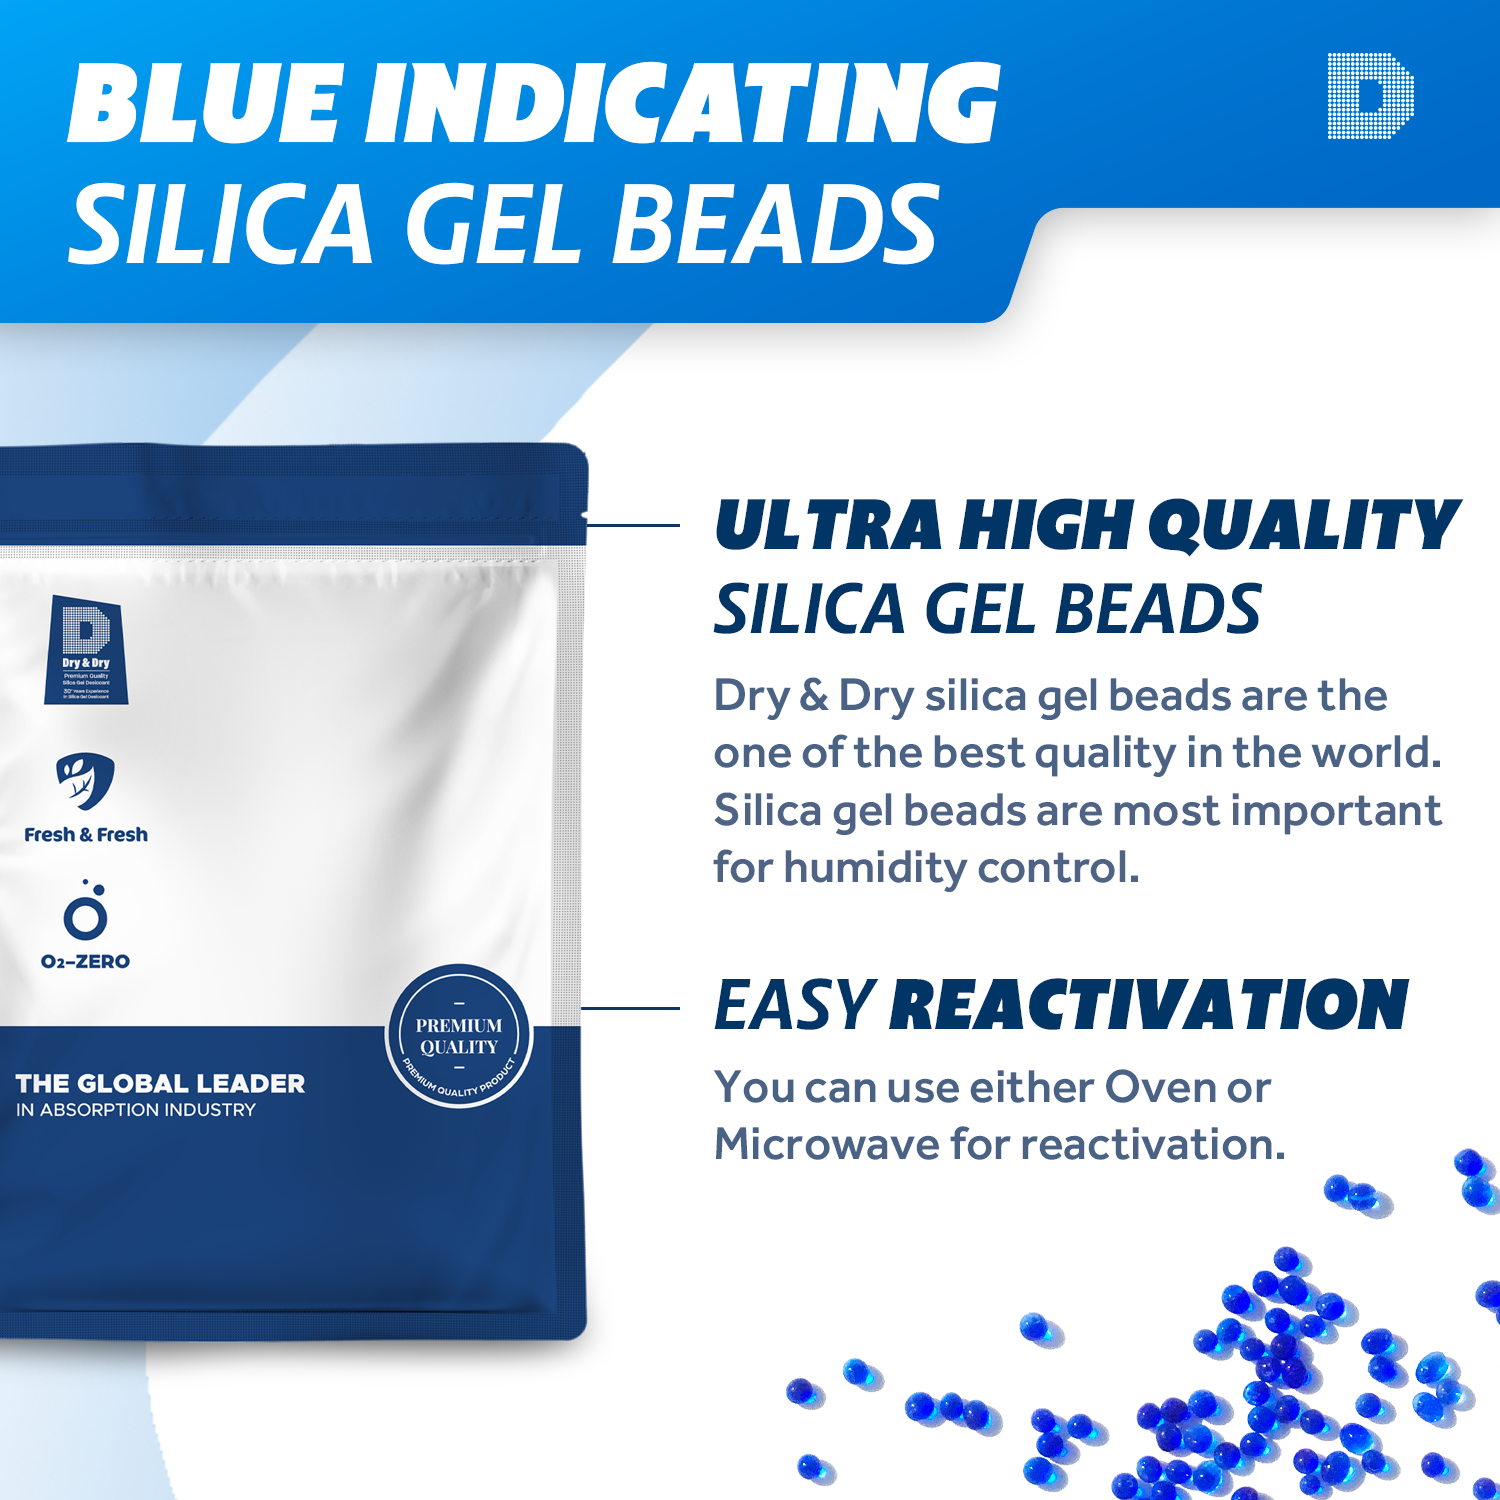 44 LBS] Blue Premium Indicating Silica Gel Beads (3-5 mm) -(1 Sack